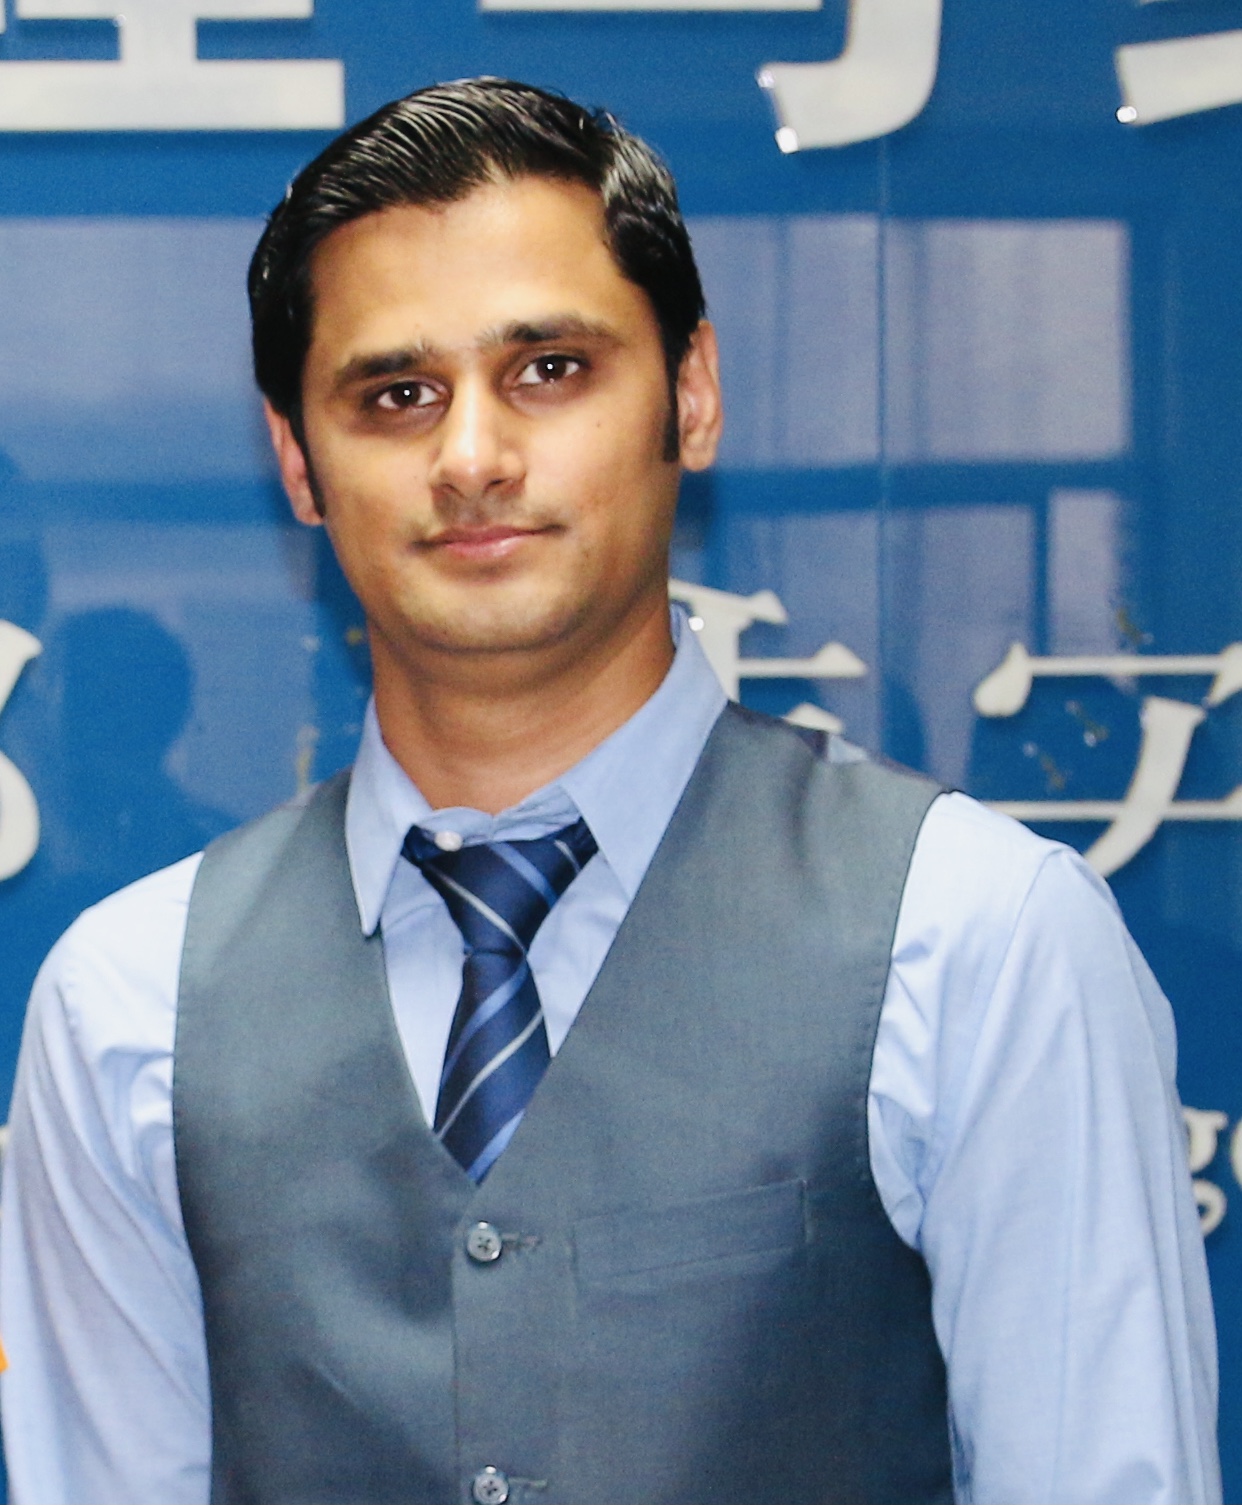 Dr. Umair Akram, Senior Lecturer